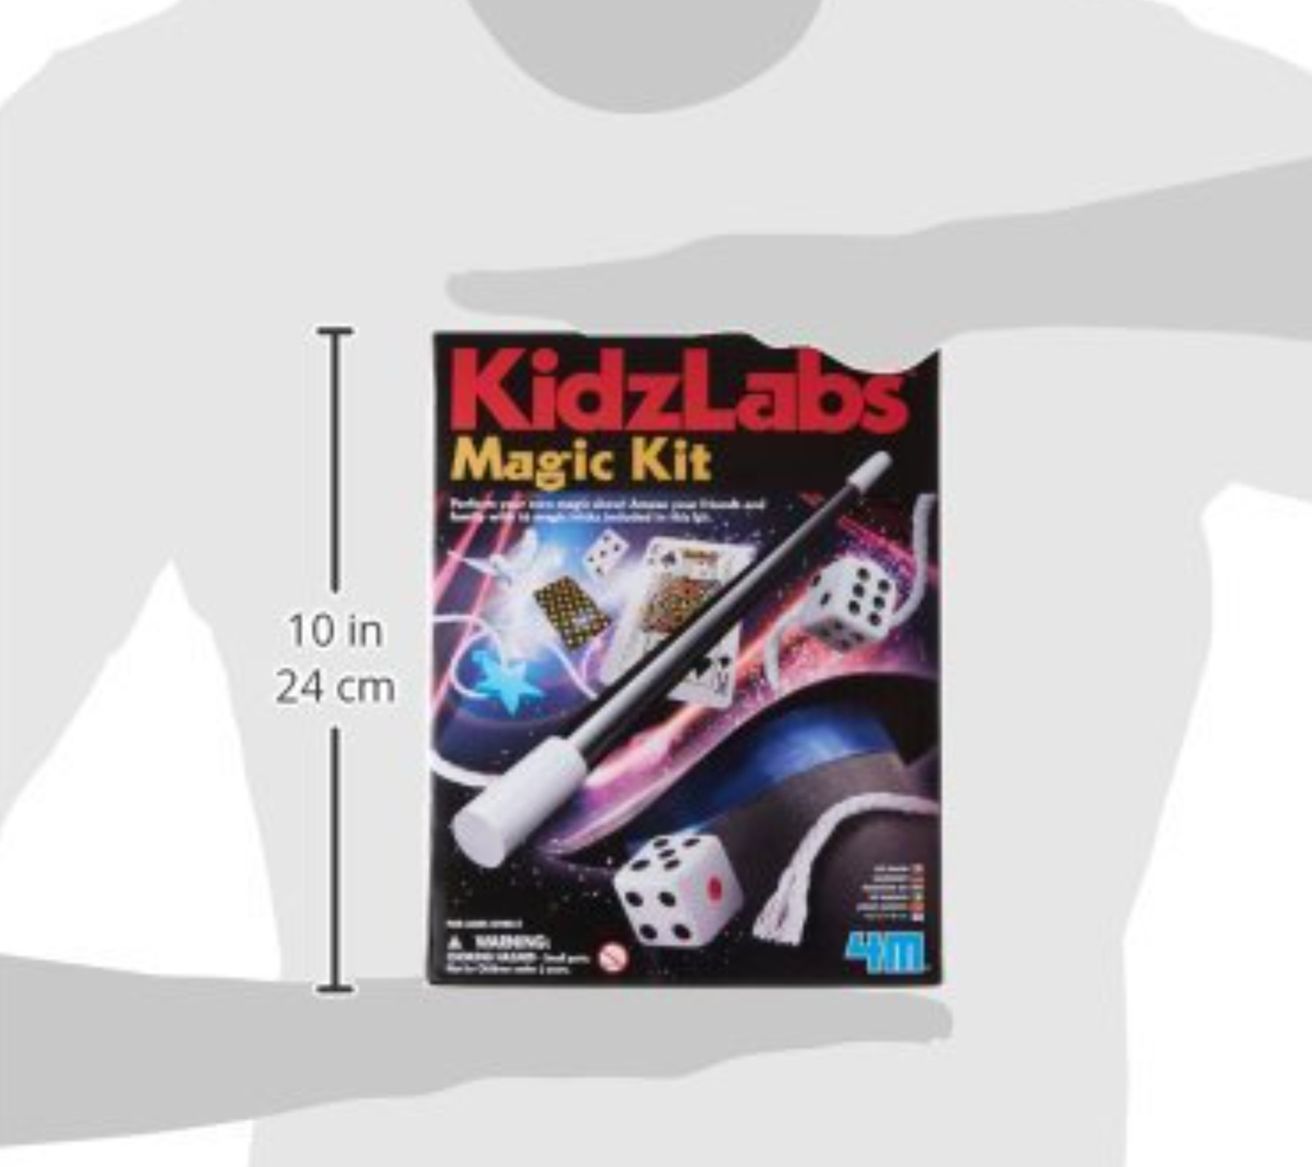 KidzLabs - Kit Magie